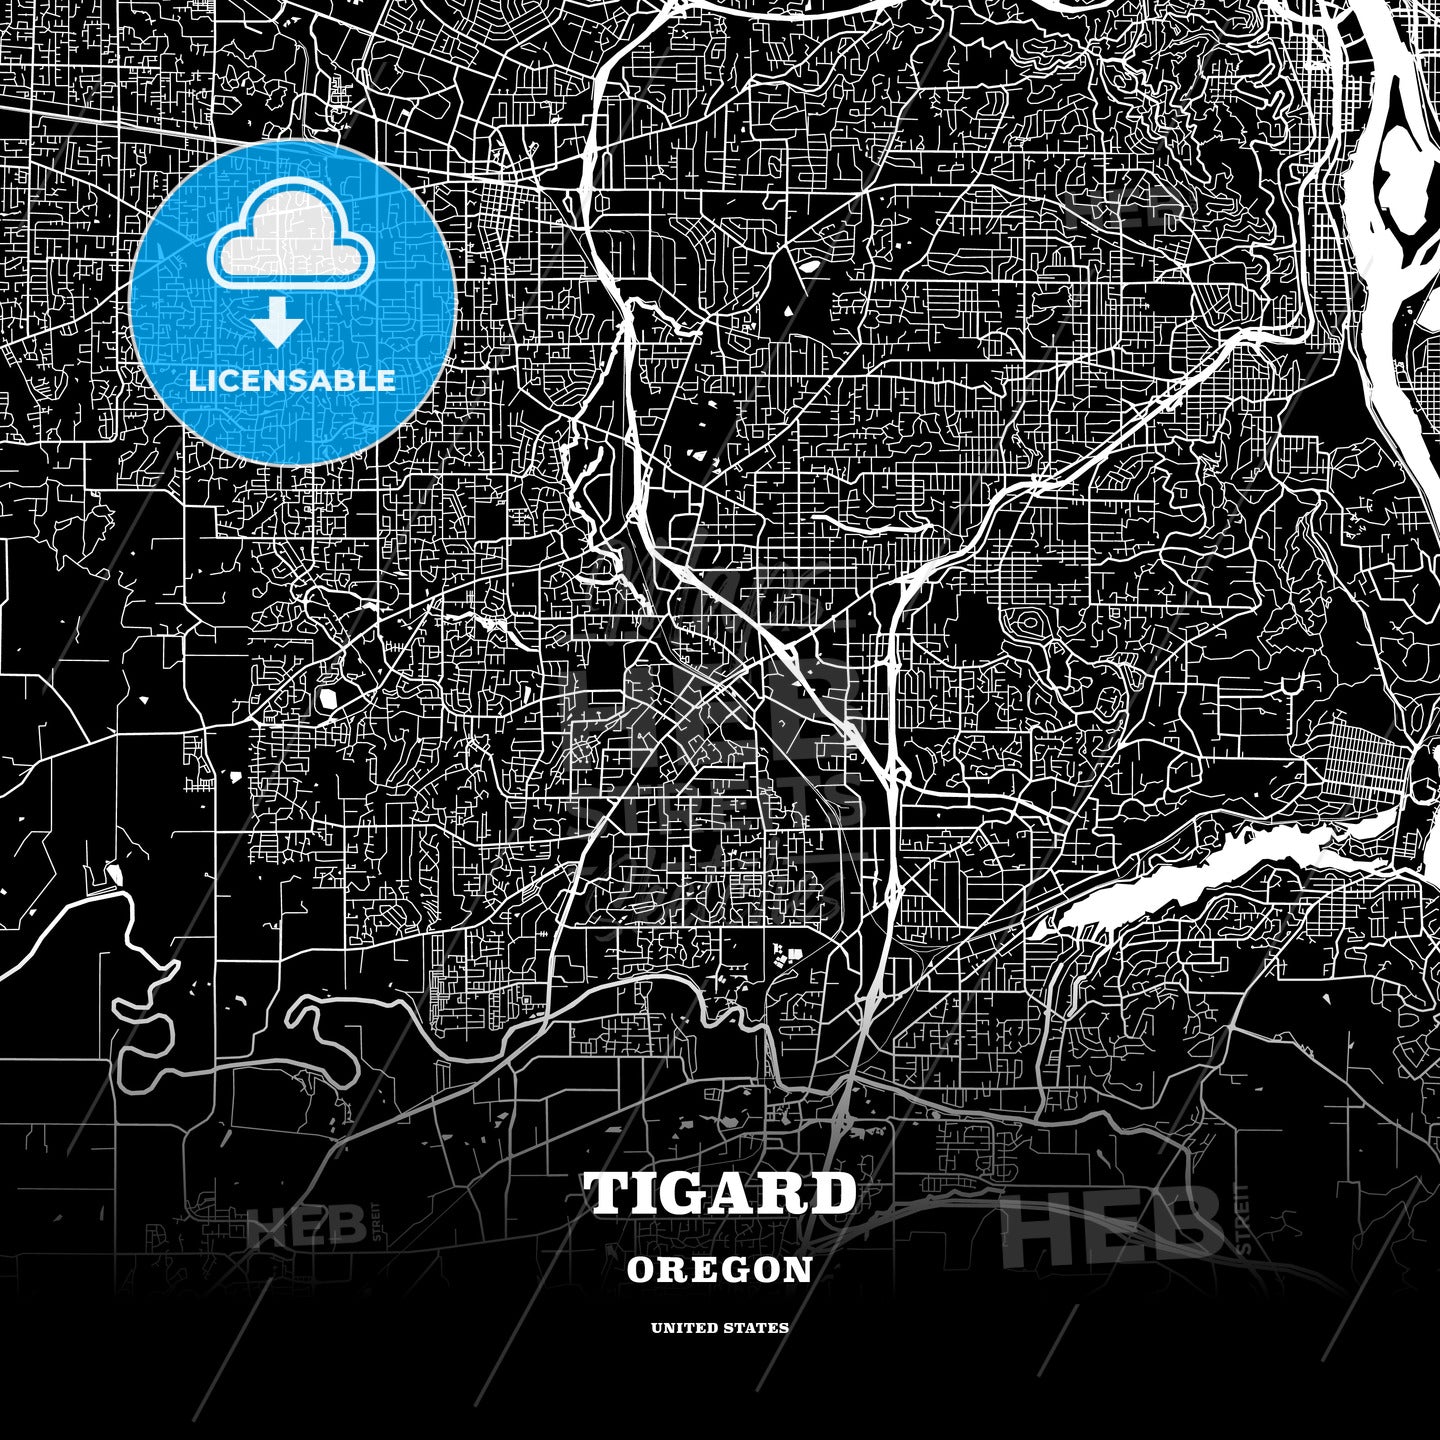 Tigard, Oregon, USA map